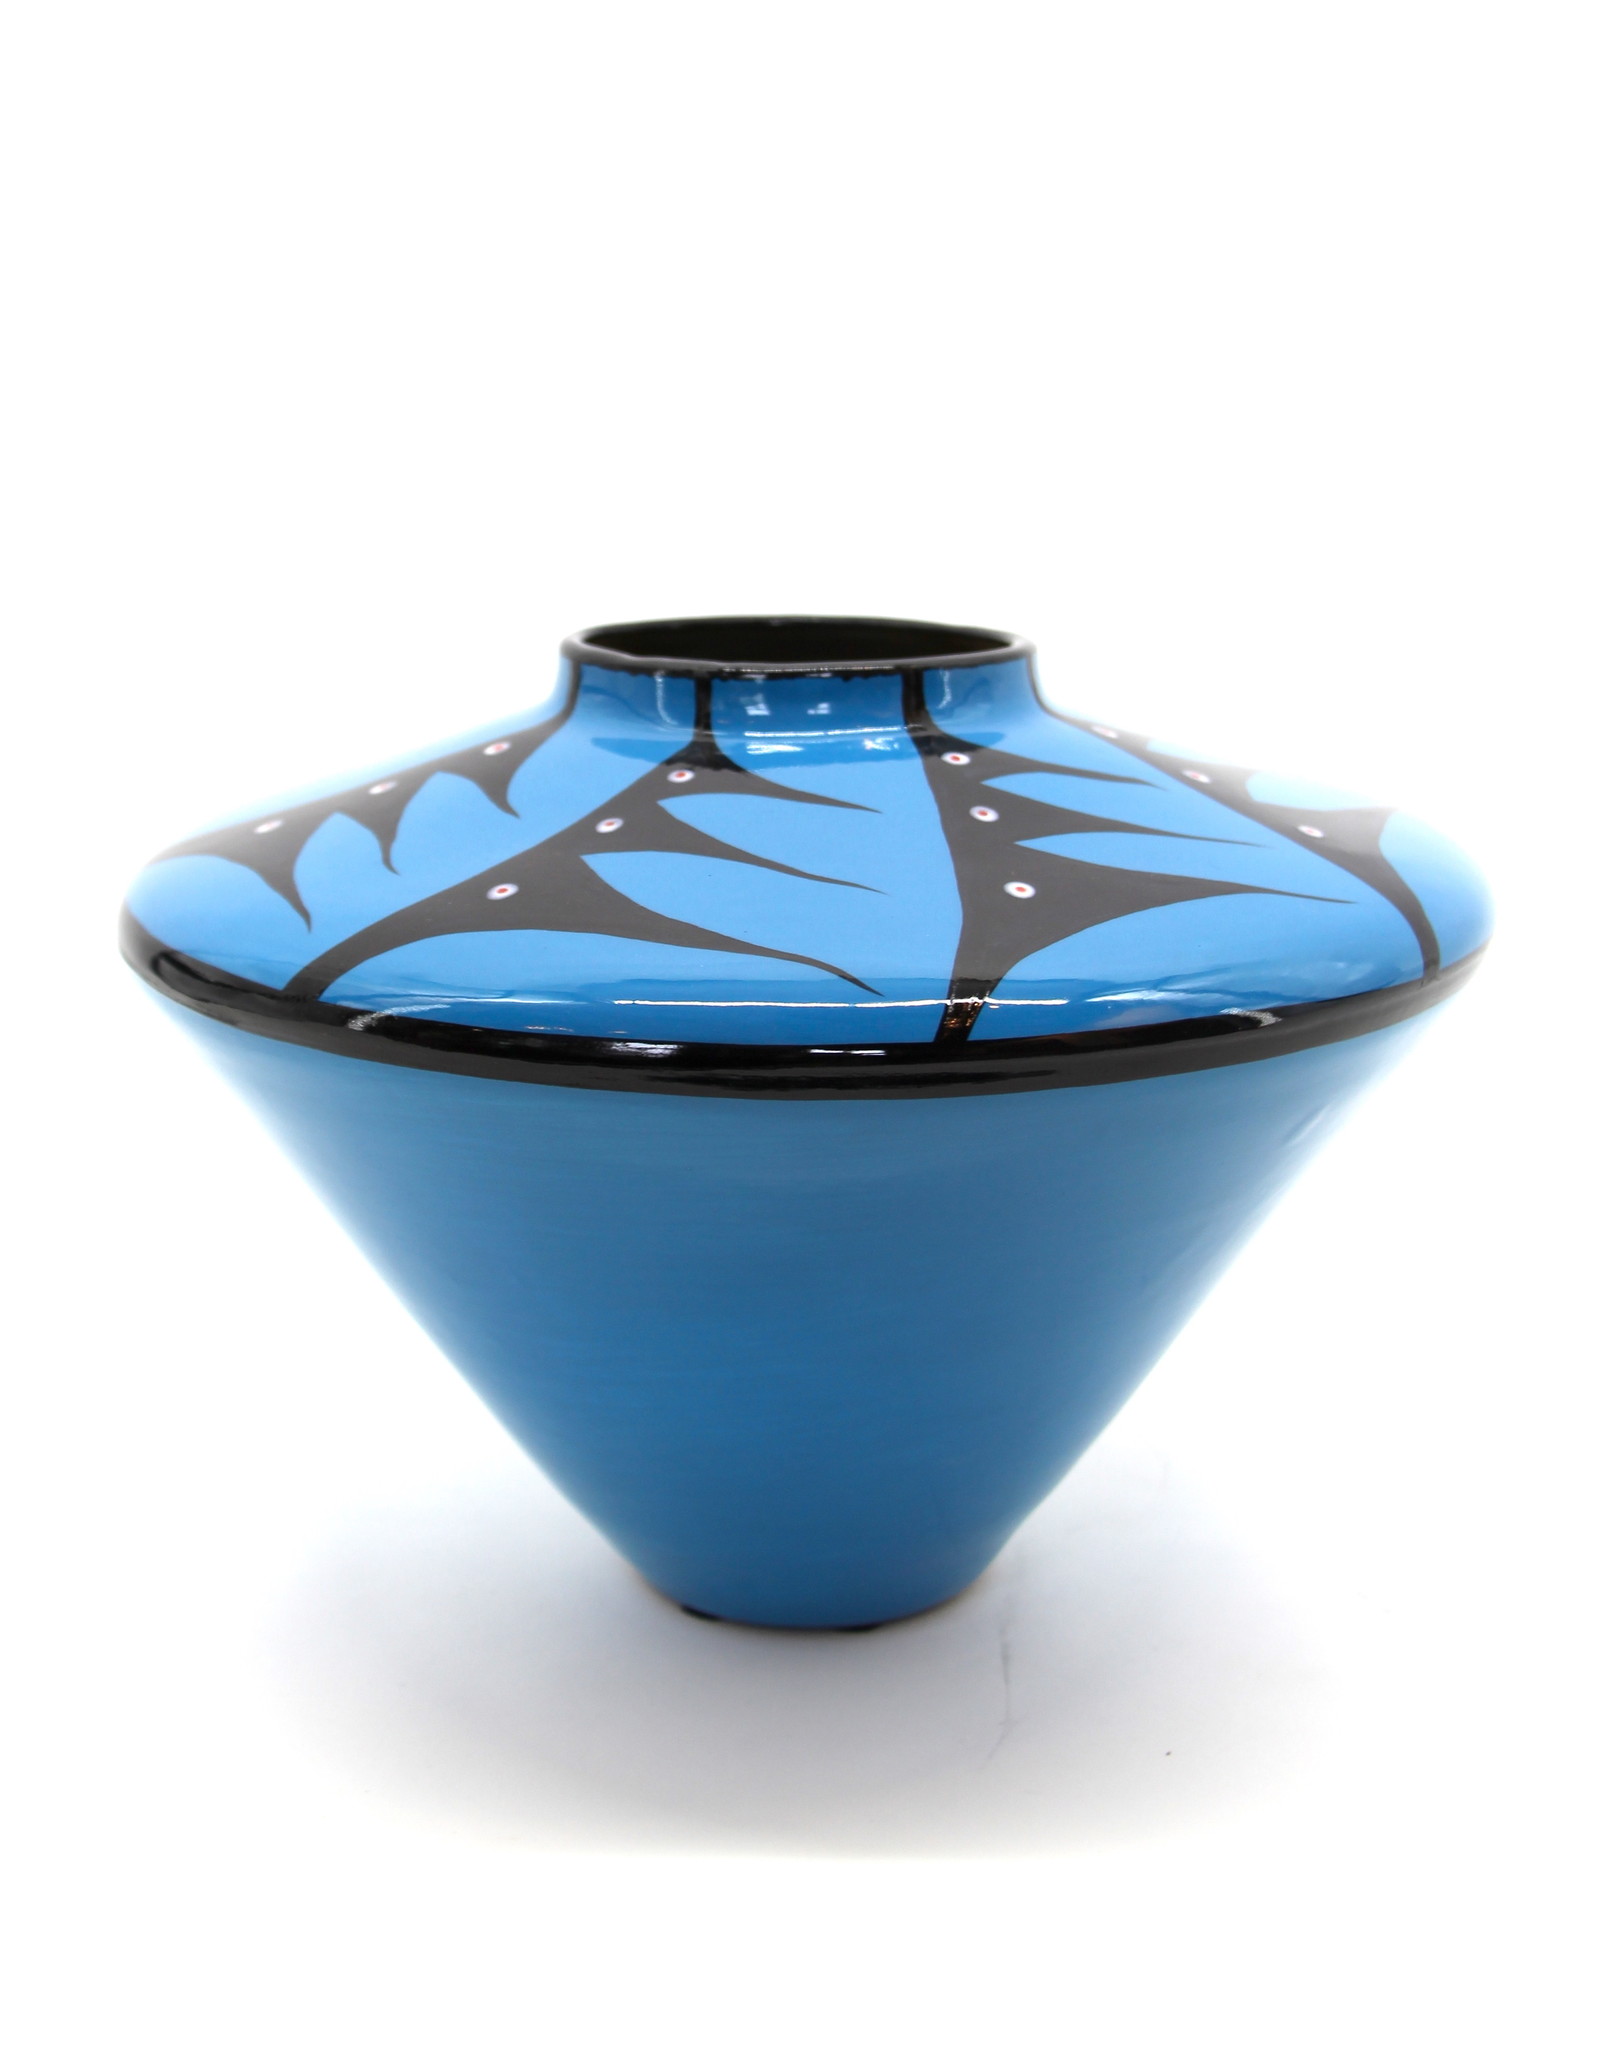 Vase Sedona par Veran Pardeahtan Bleu - SV3